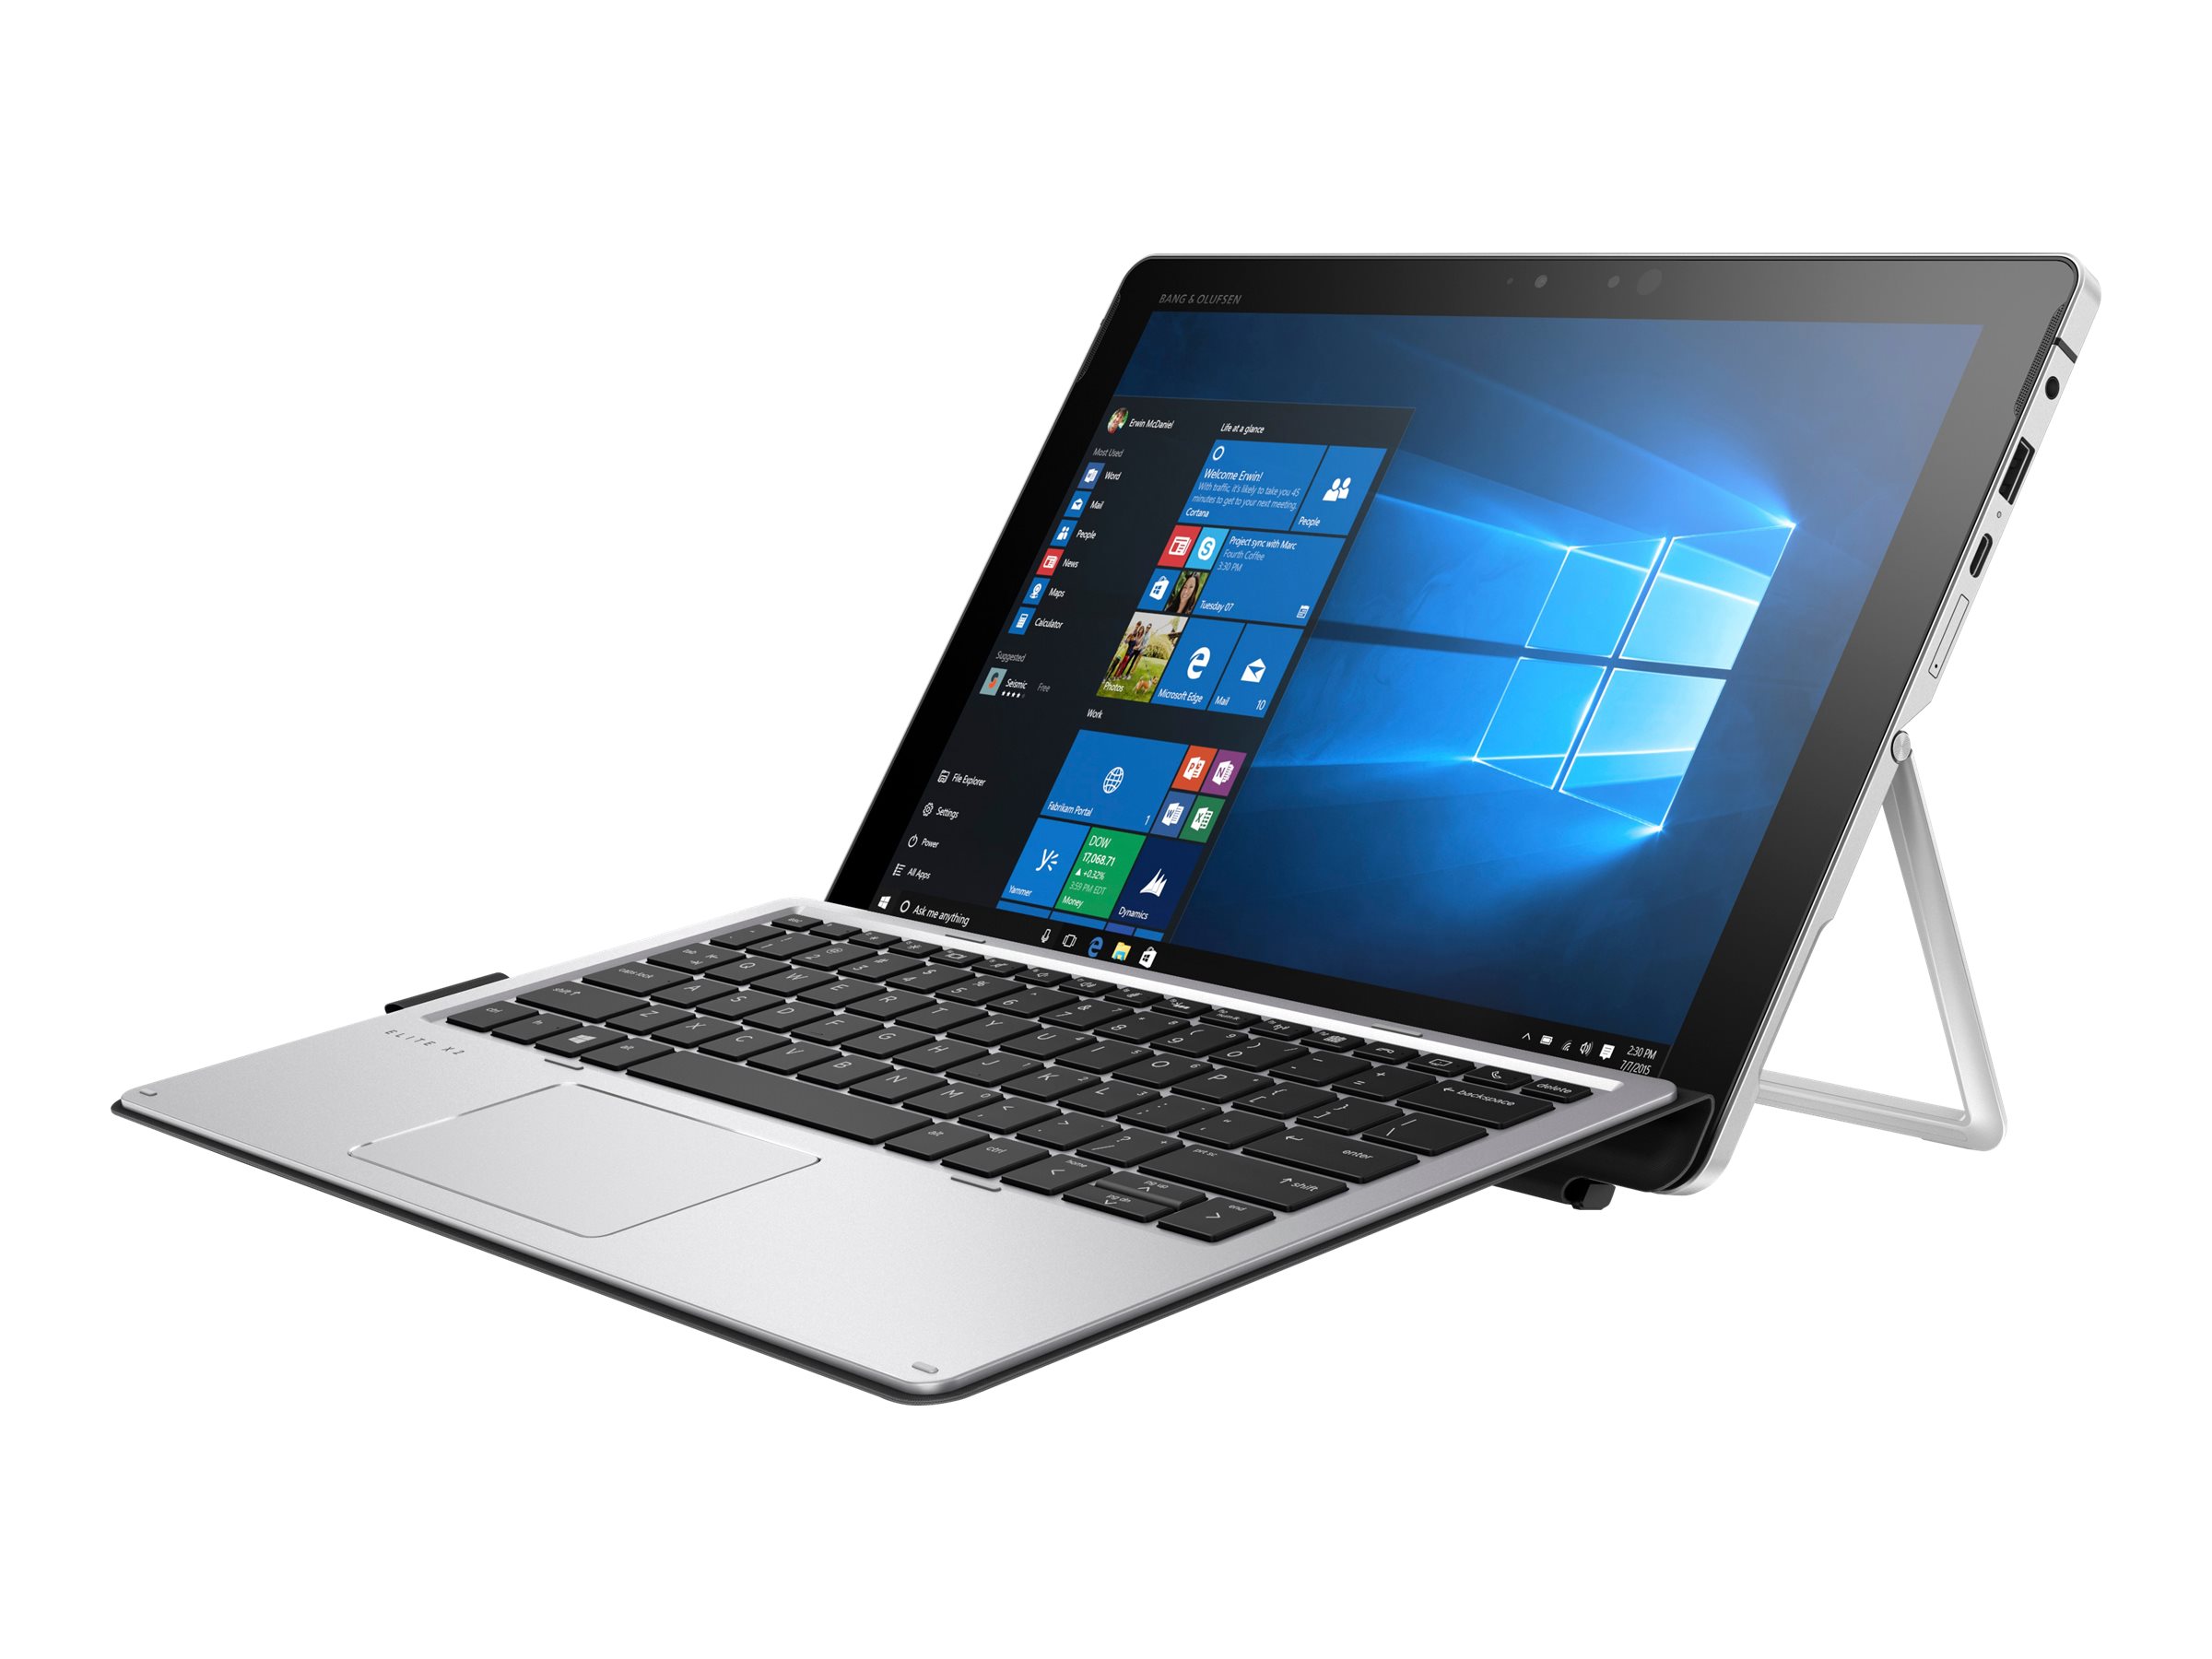 HP Elite x2 1012 G2 - Tablet - mit abnehmbarer Tastatur - Core i5 7200U 2.5 GHz - Core i5 - 2,5 GHz (1LV76EA#ABF)